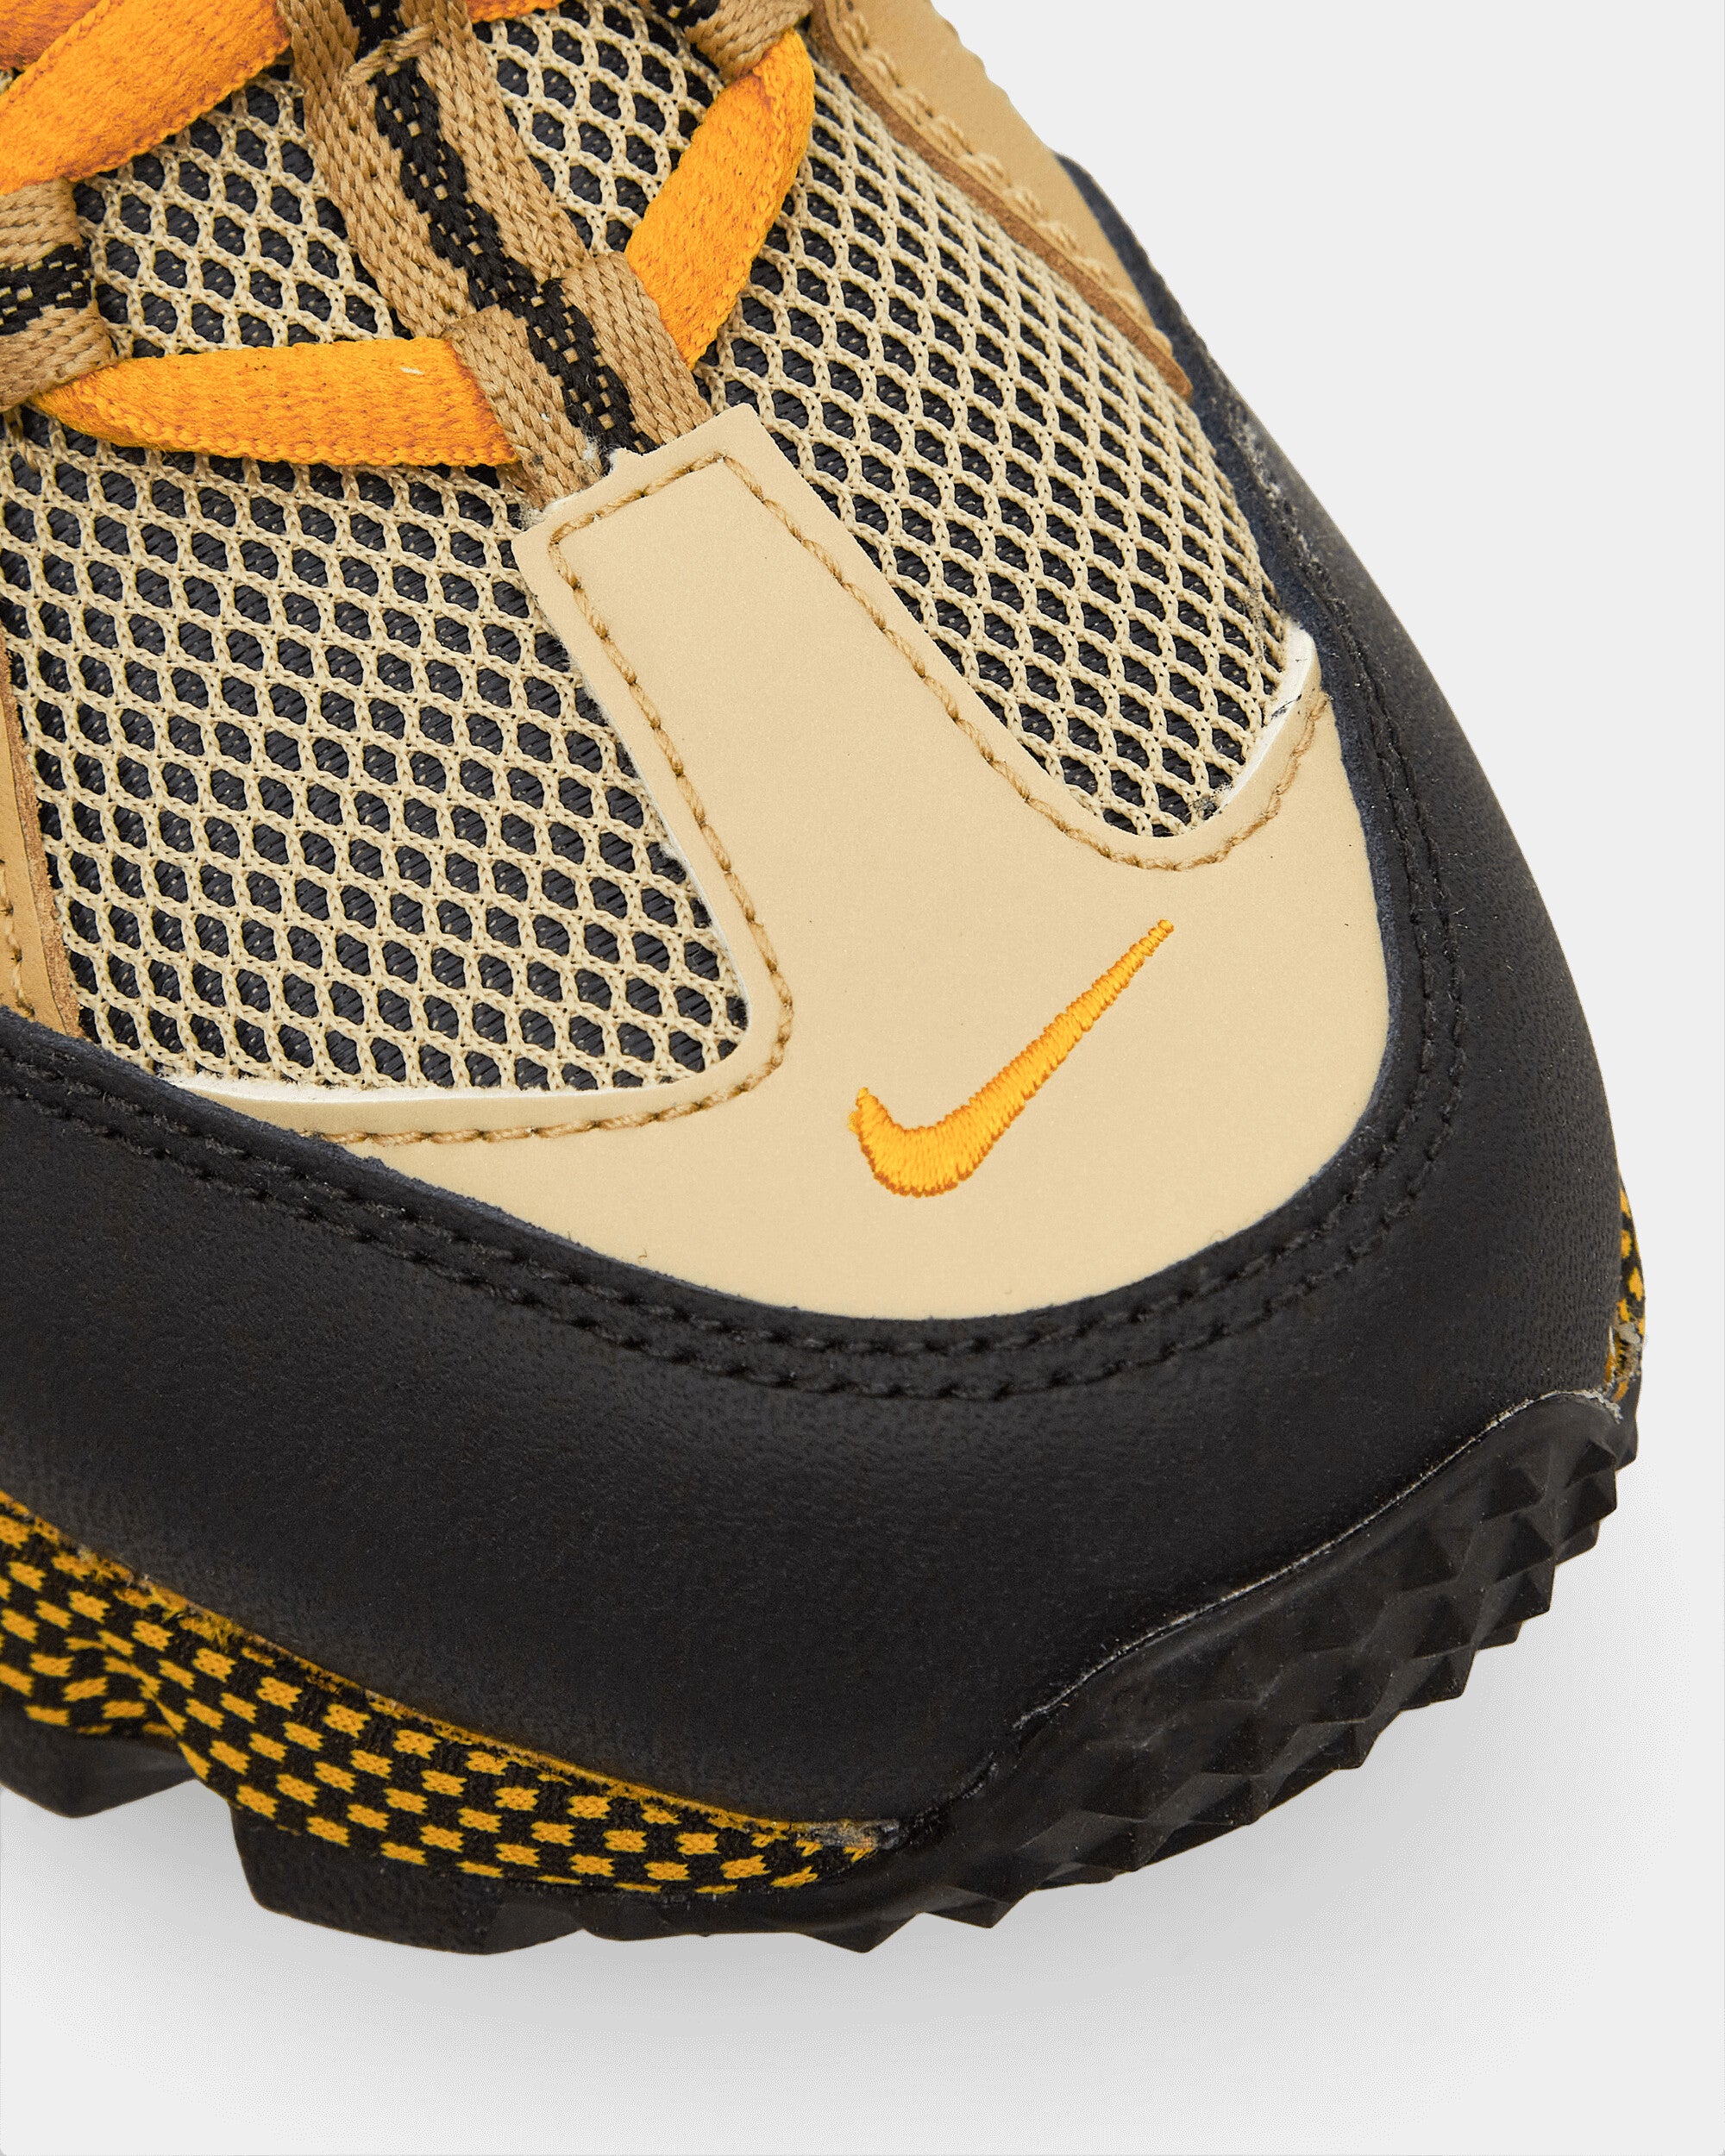 Nike Air Humara Qs Wheat Grass/Yellow Ochre Sneakers Low FJ7098-700